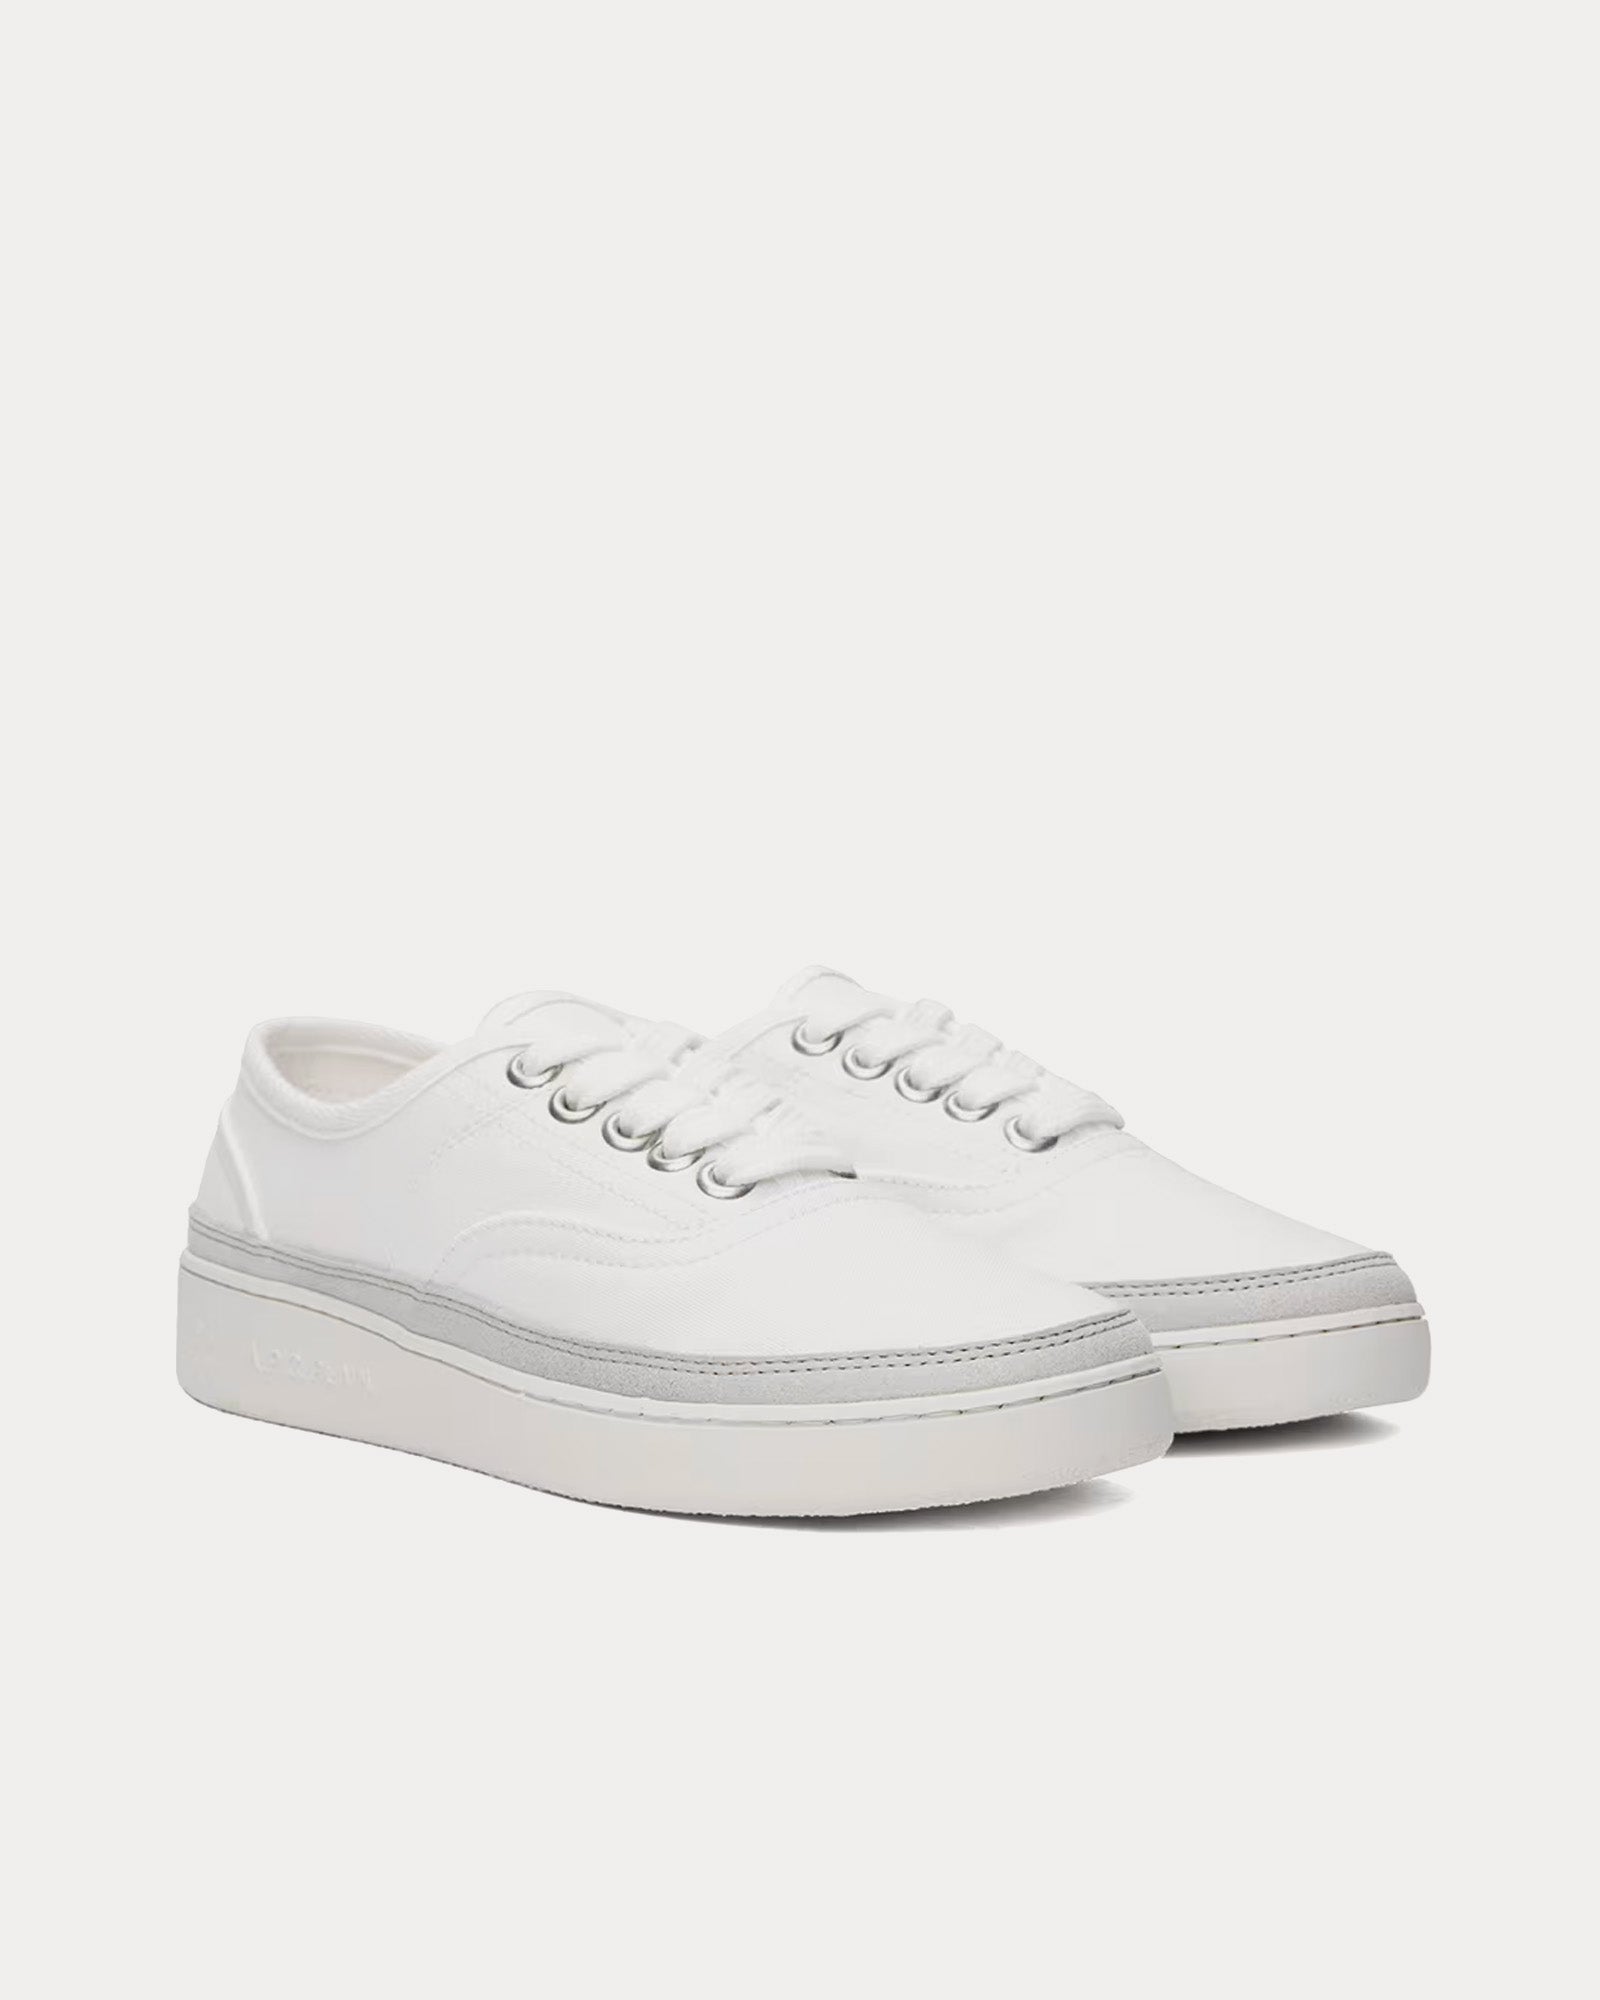 A.P.C. - Plain Simple Canvas White Low Top Sneakers